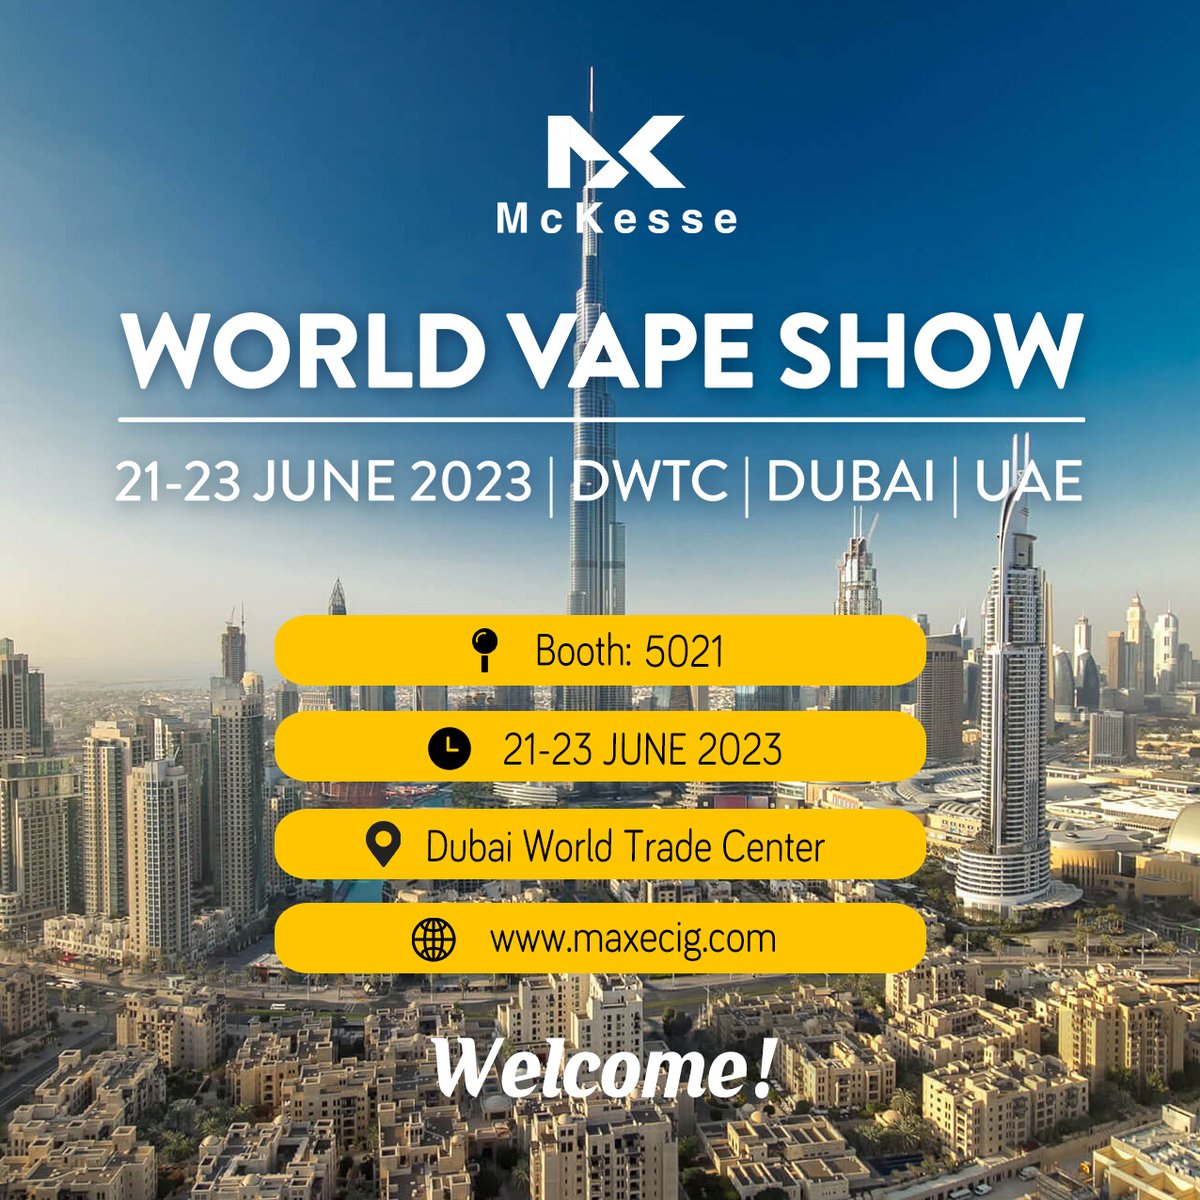 📍 BOOTH: 5021 McKessevapeofficial    
21-23 JUNE 2023 | DWTC | DUBAI | UAE
#McKesse #McKessevape #wvsdubai23 #worldvapeshow #dubaivape #exhibitors #eventprofs #dubaievent #wvsdubai #vapeevent #vapeshow #vapeinfluencer #vapecommunity #vapelife #vapedubai #dubailifestyle #vape